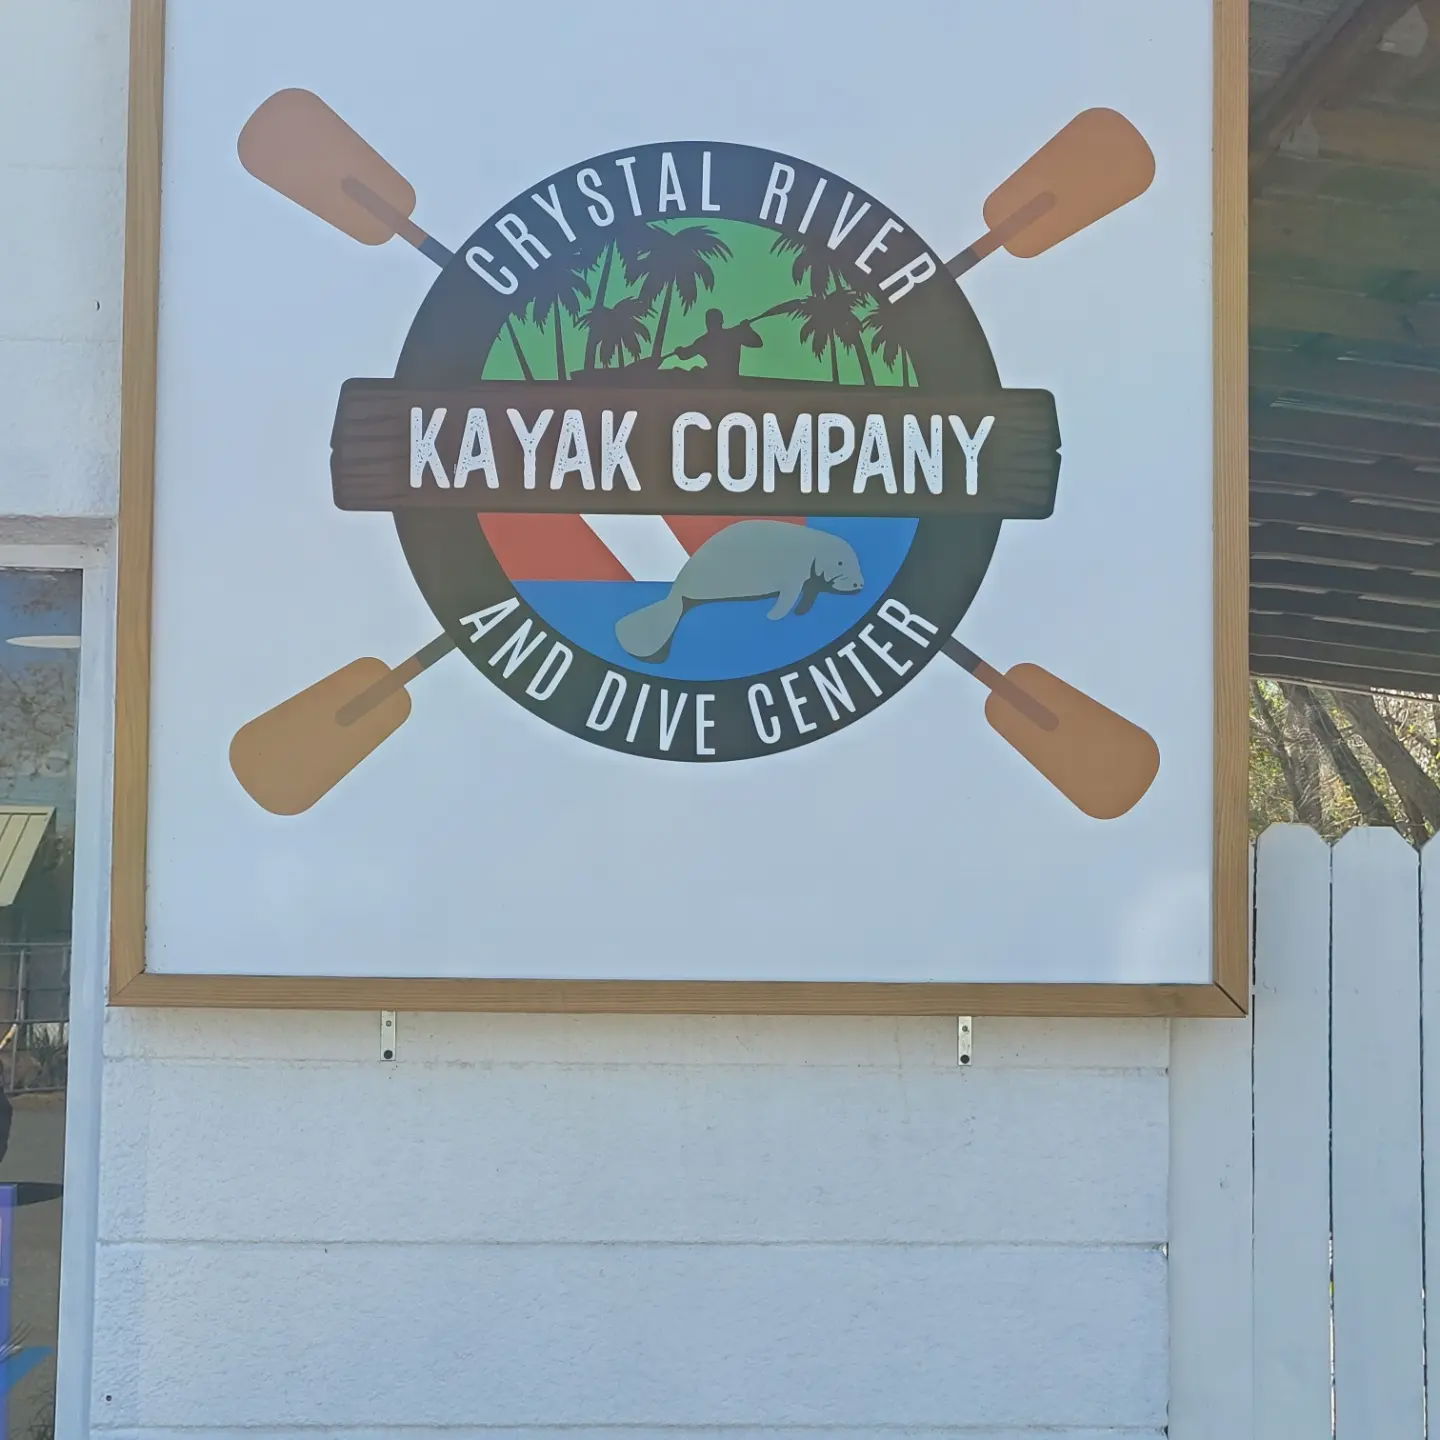 Crystal River Kayak Company & Dive Center - Crystal River, FL - 2/6/23